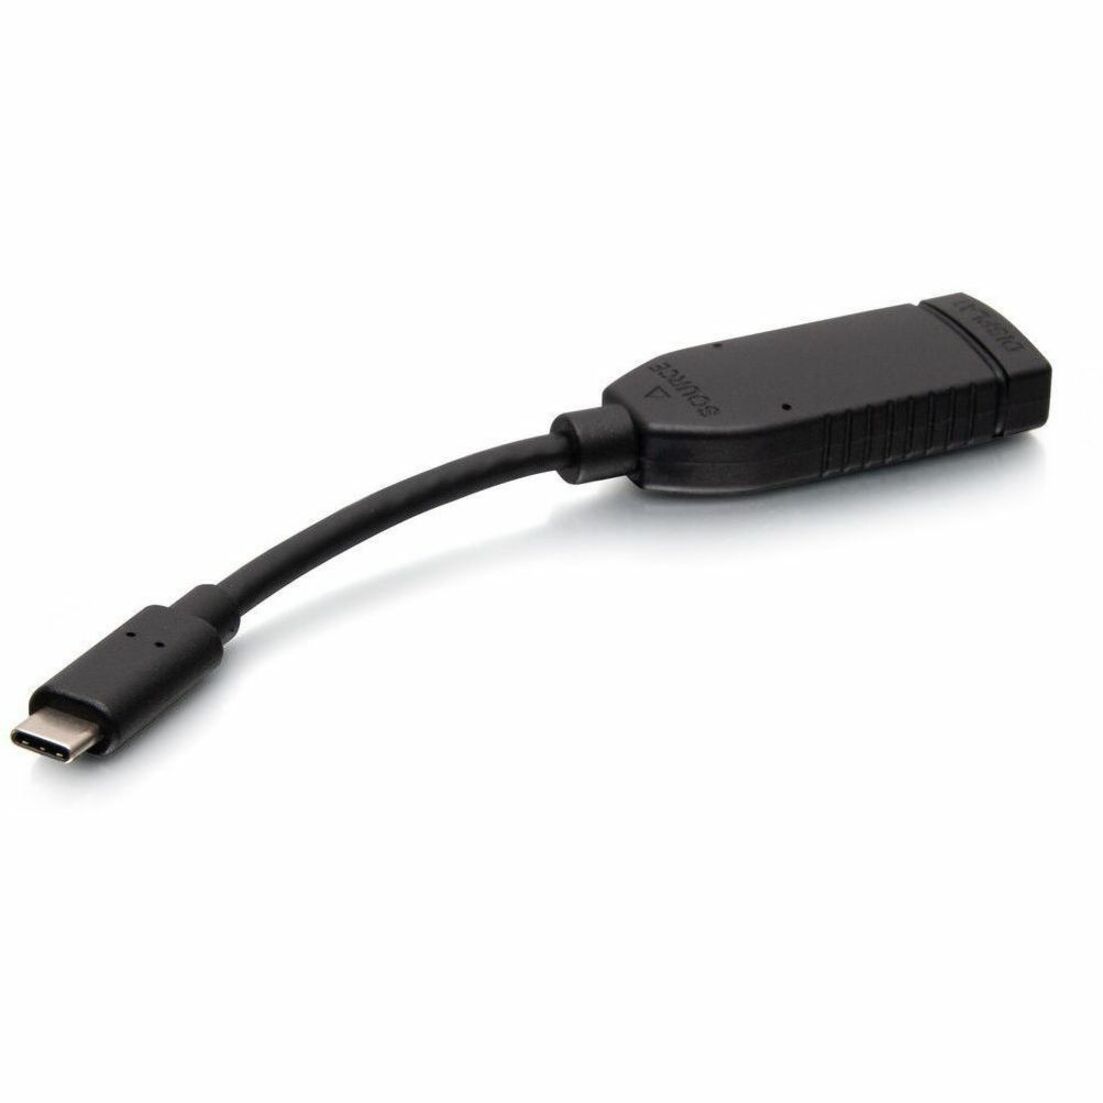 C2G C2G30035 USB-C zu HDMI Dongle Adapter Konverter Plug and Play 3840 x 2160 Auflösung unterstützt